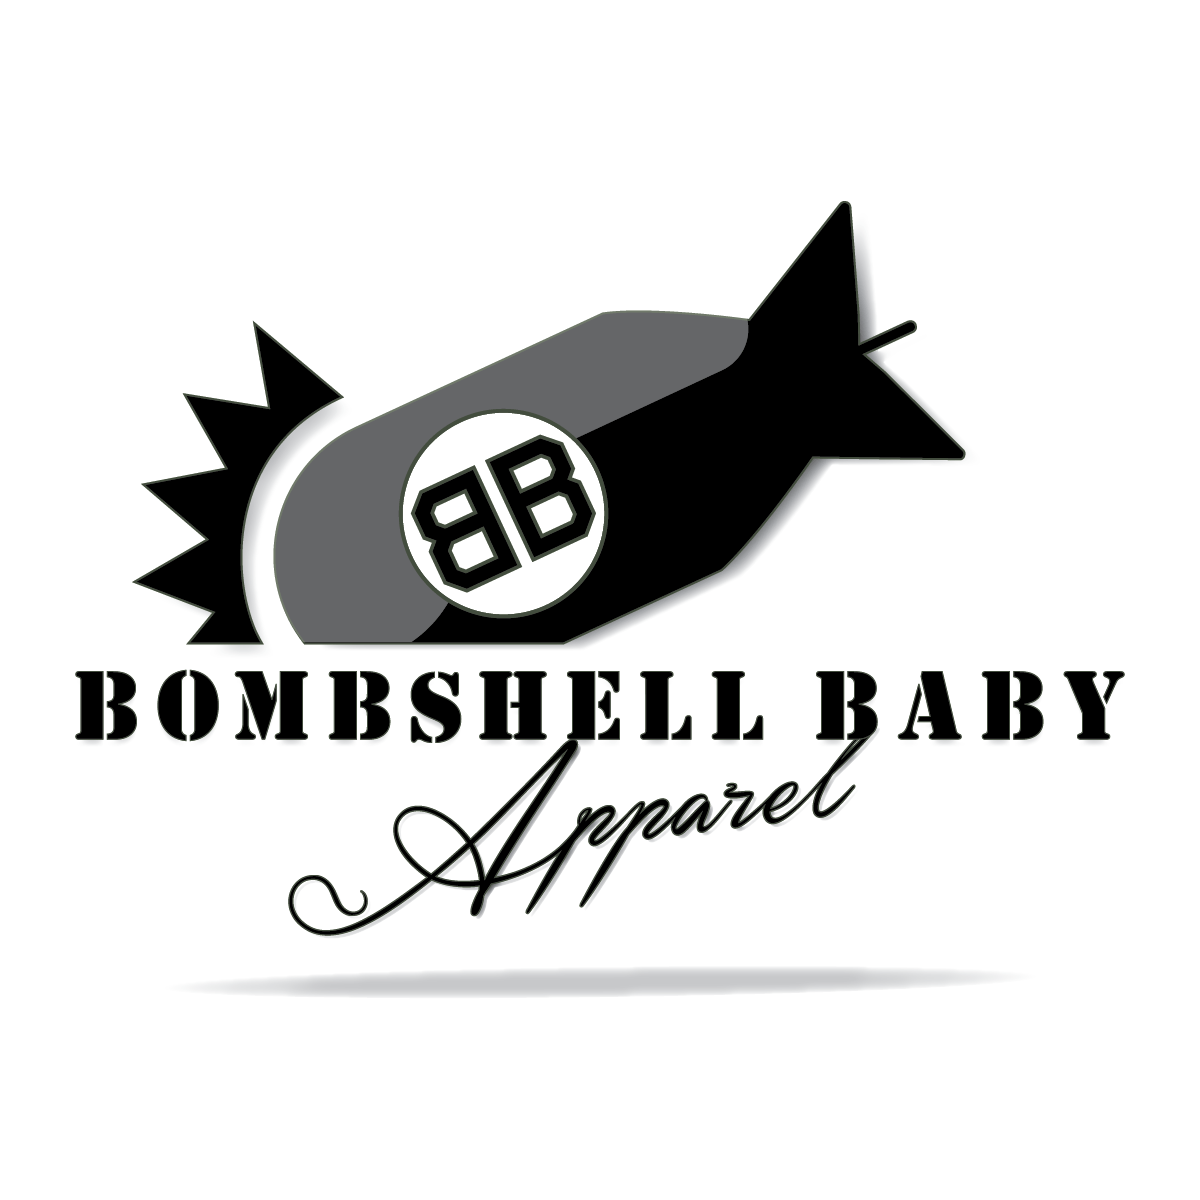 Bombshell Logo - Bombshell baby logo BnW | Print Aura - DTG Printing Services